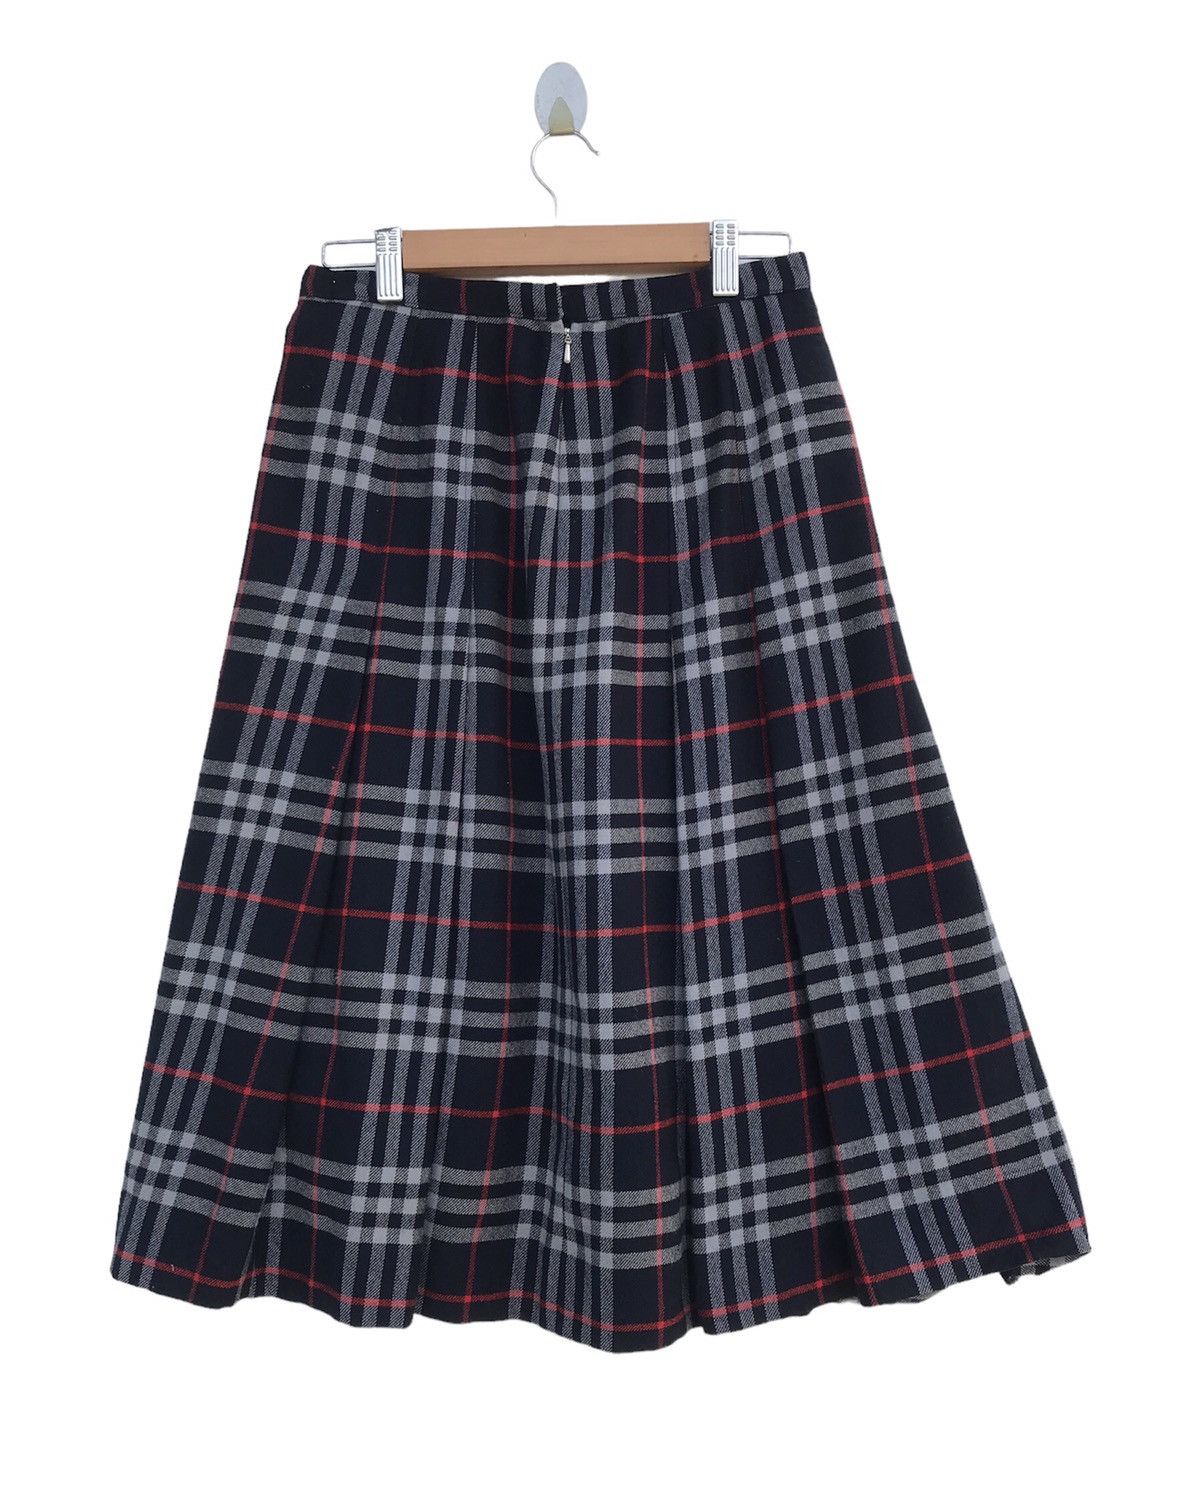 Burberry Nova Check Skirt - 1